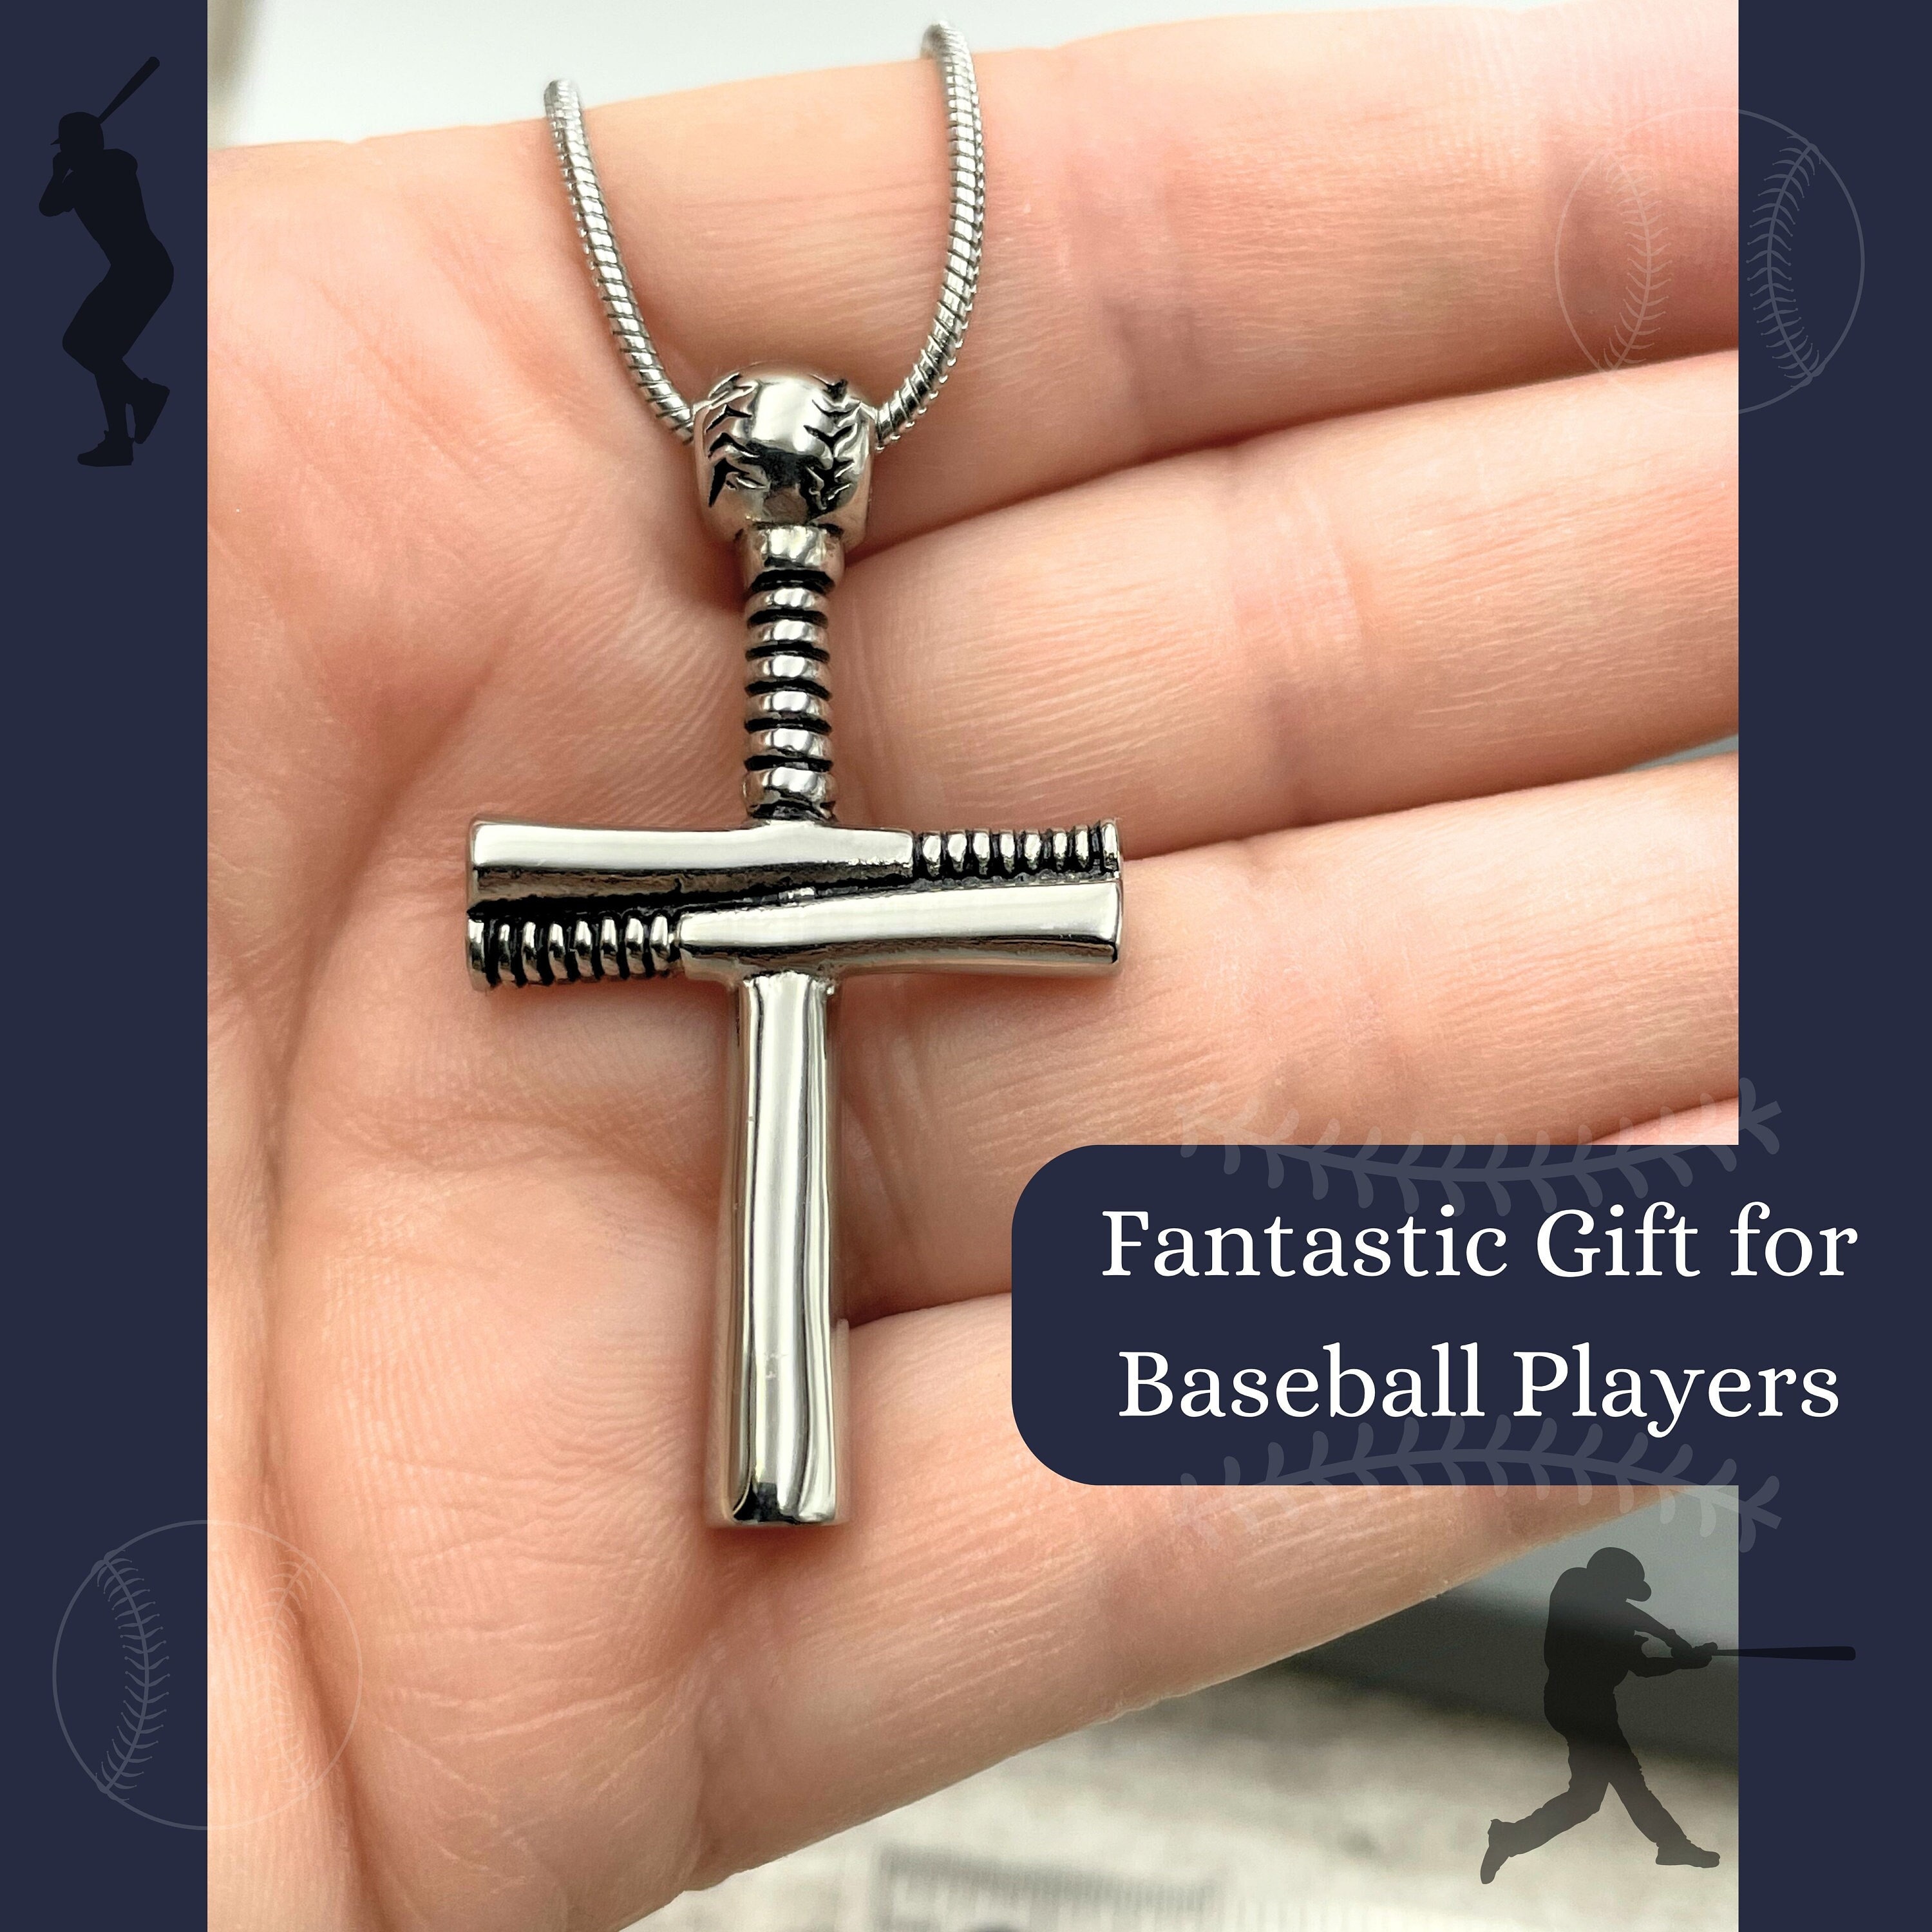 Baseball Cross Pendant Men Women Religious Necklace Alloy Chain Neck Chain  Jewelry Accessories Gift